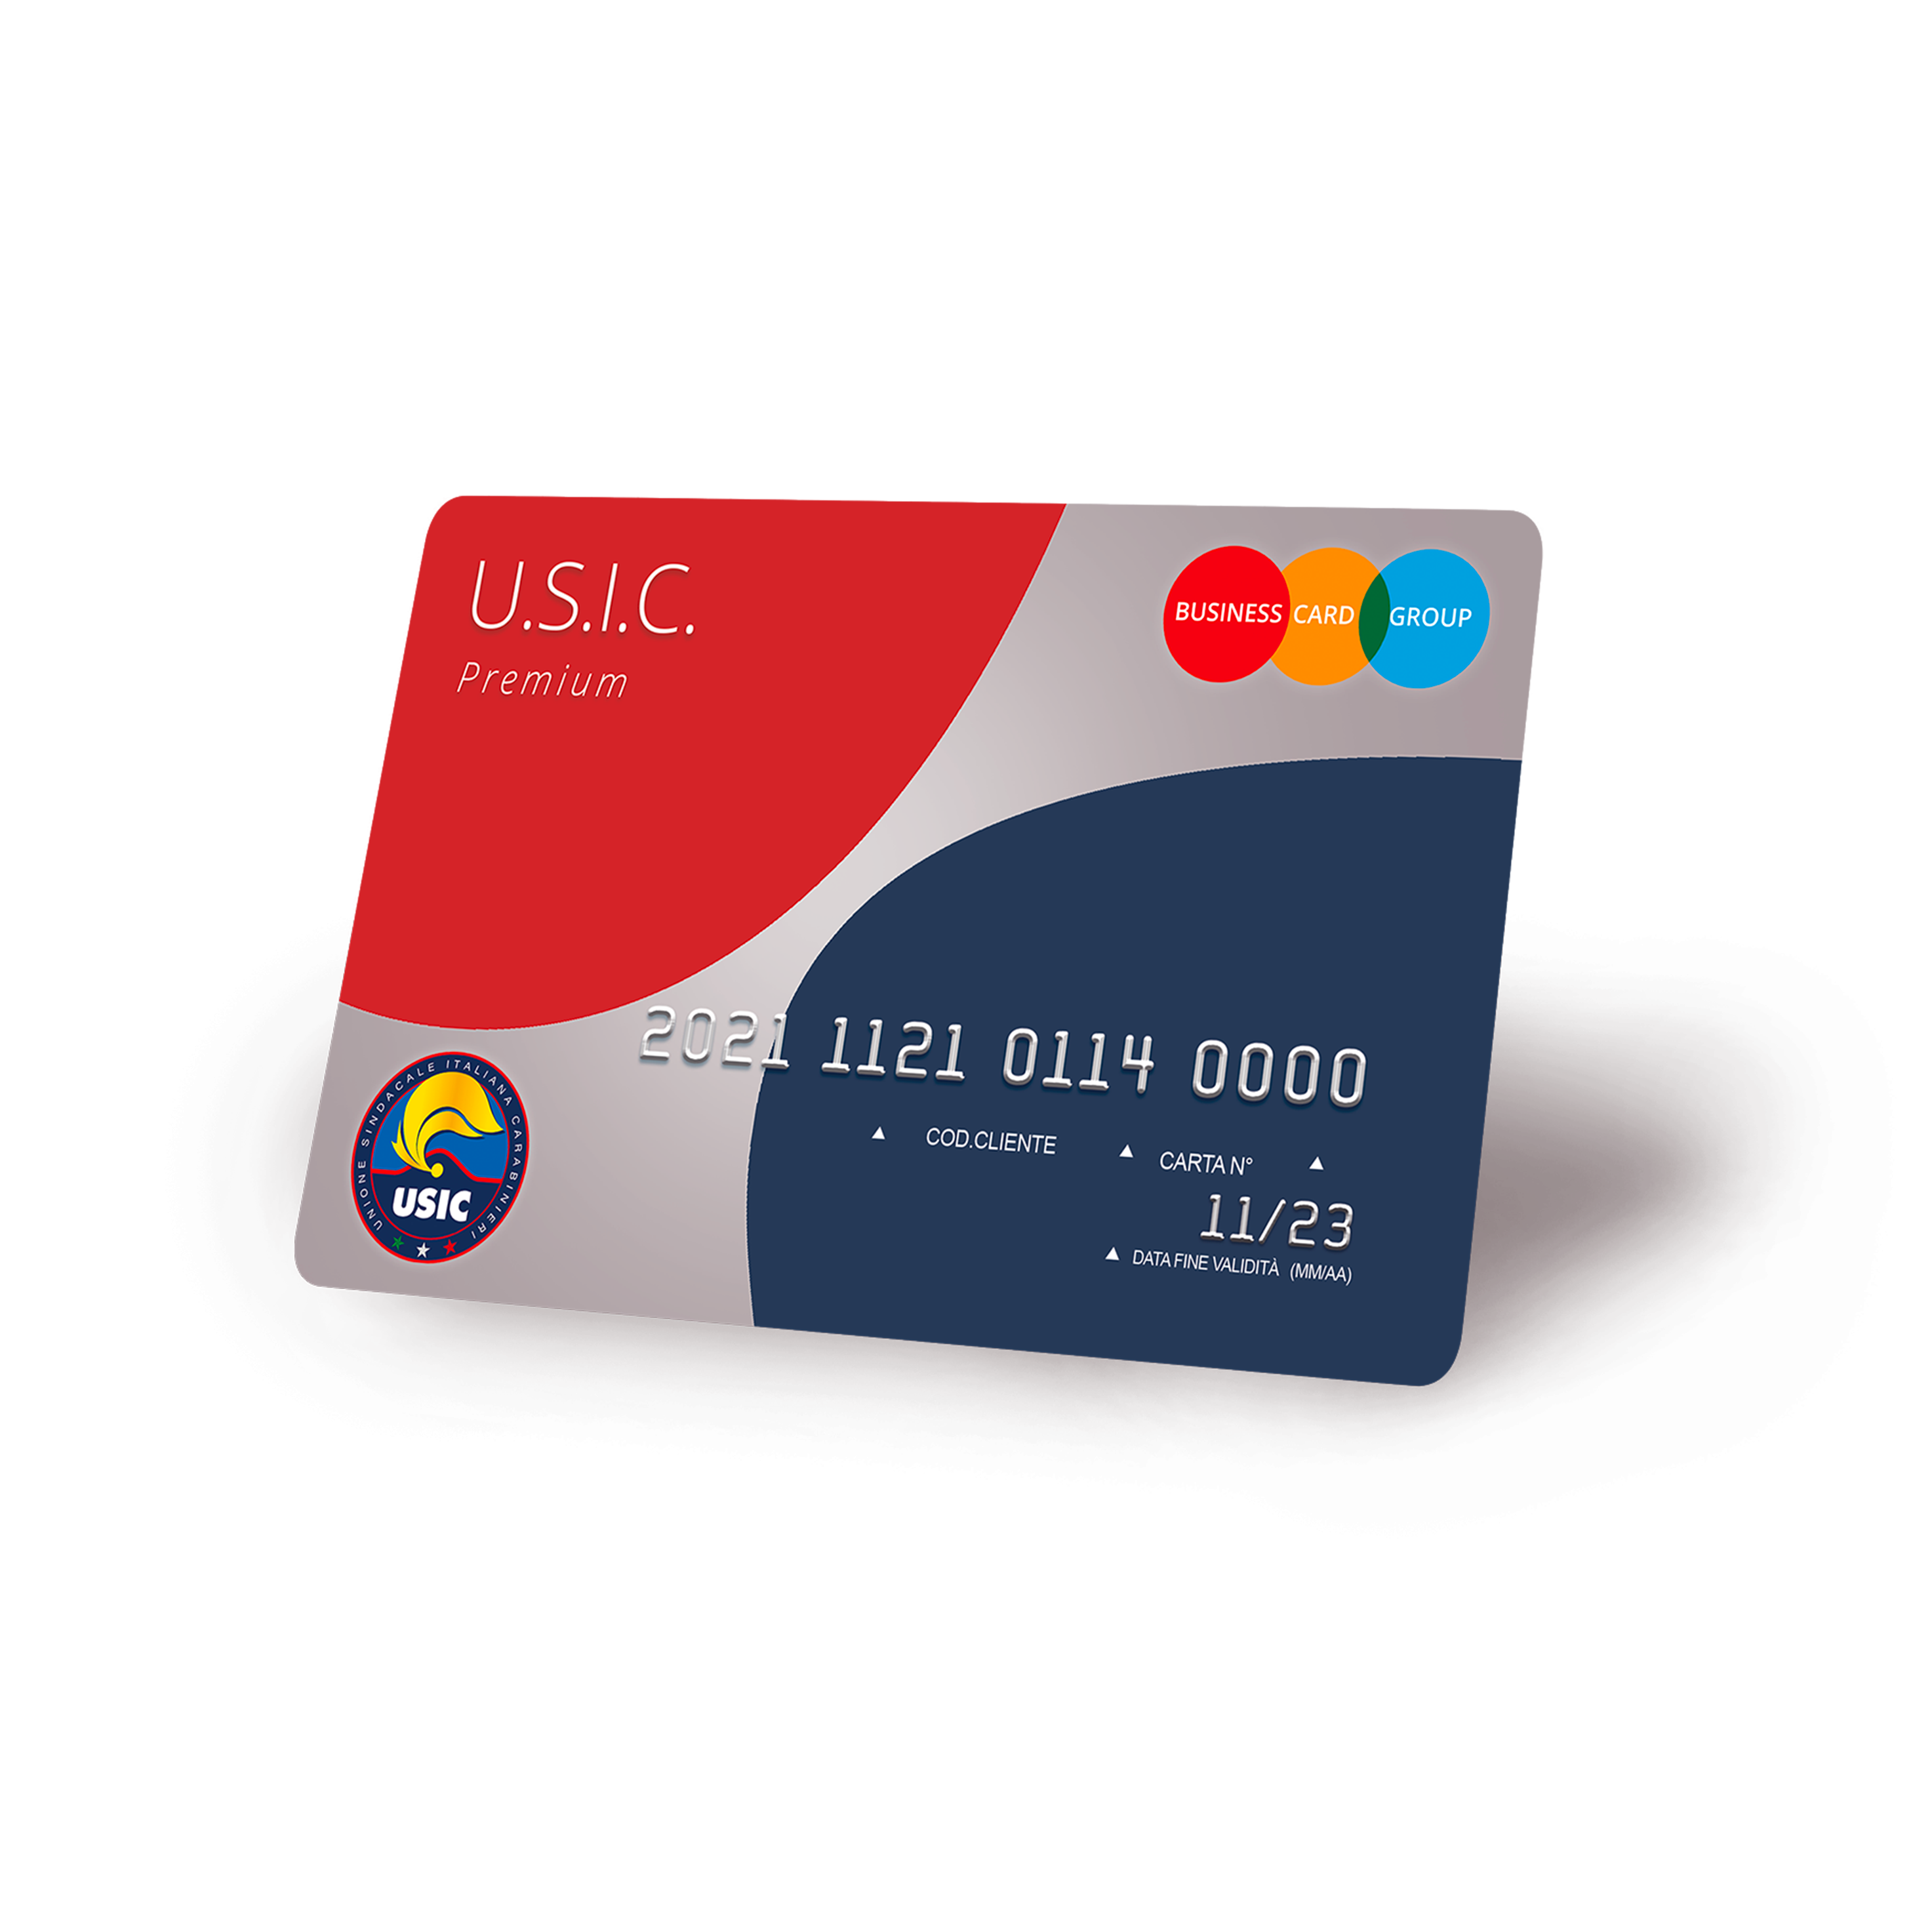 Business Card U.S.I.C. - Premium